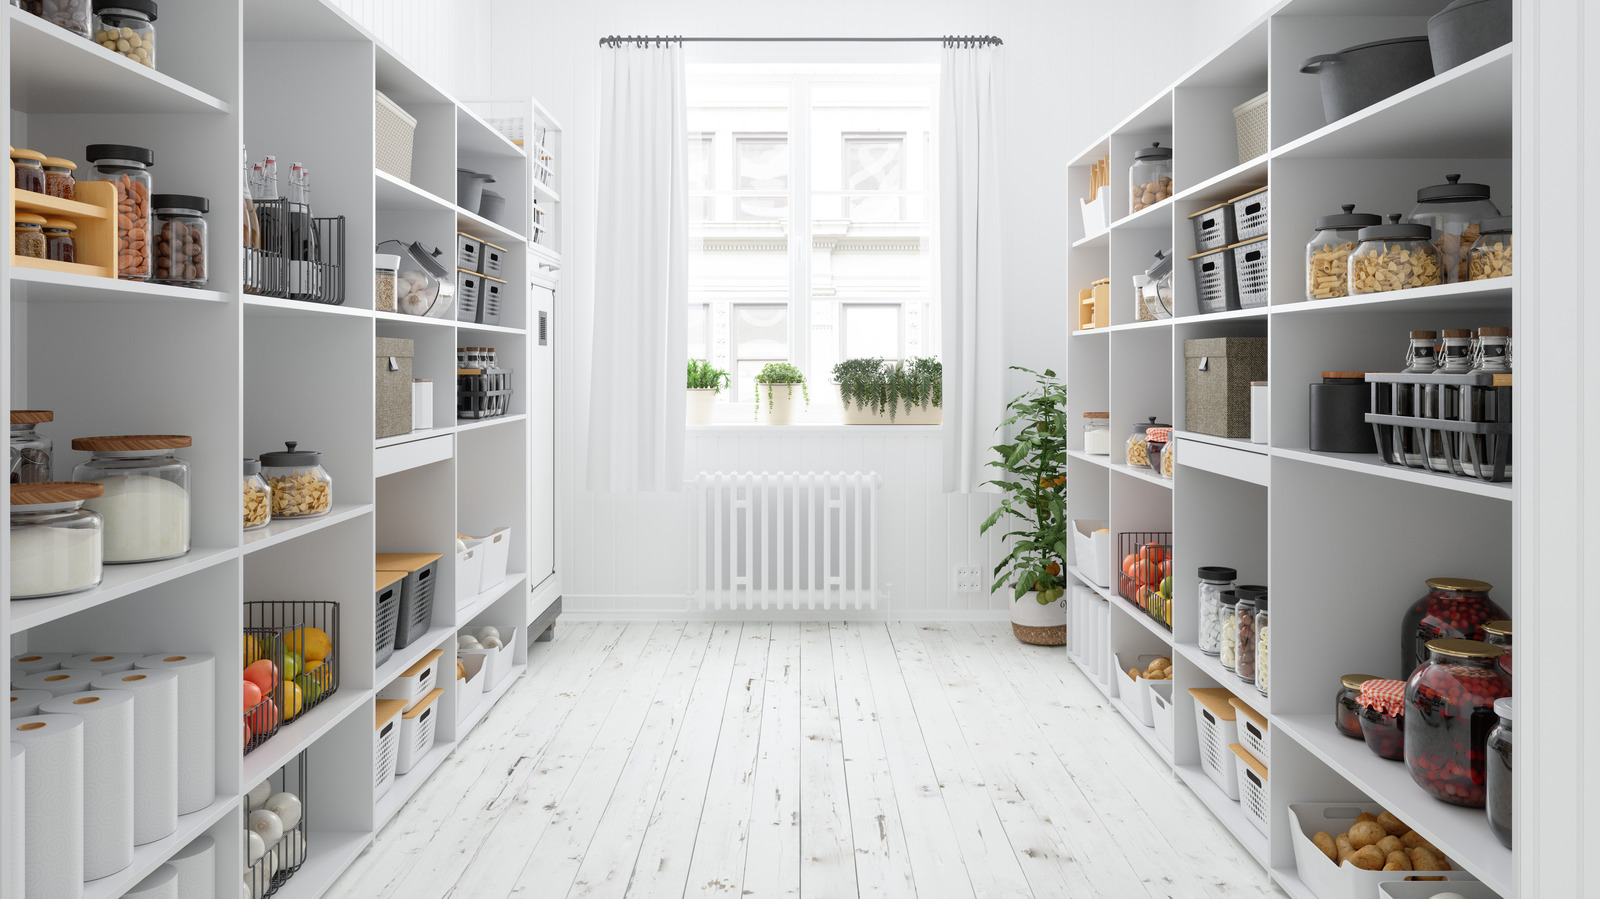 Stylish Pantry Shelving to Keep Things Organized